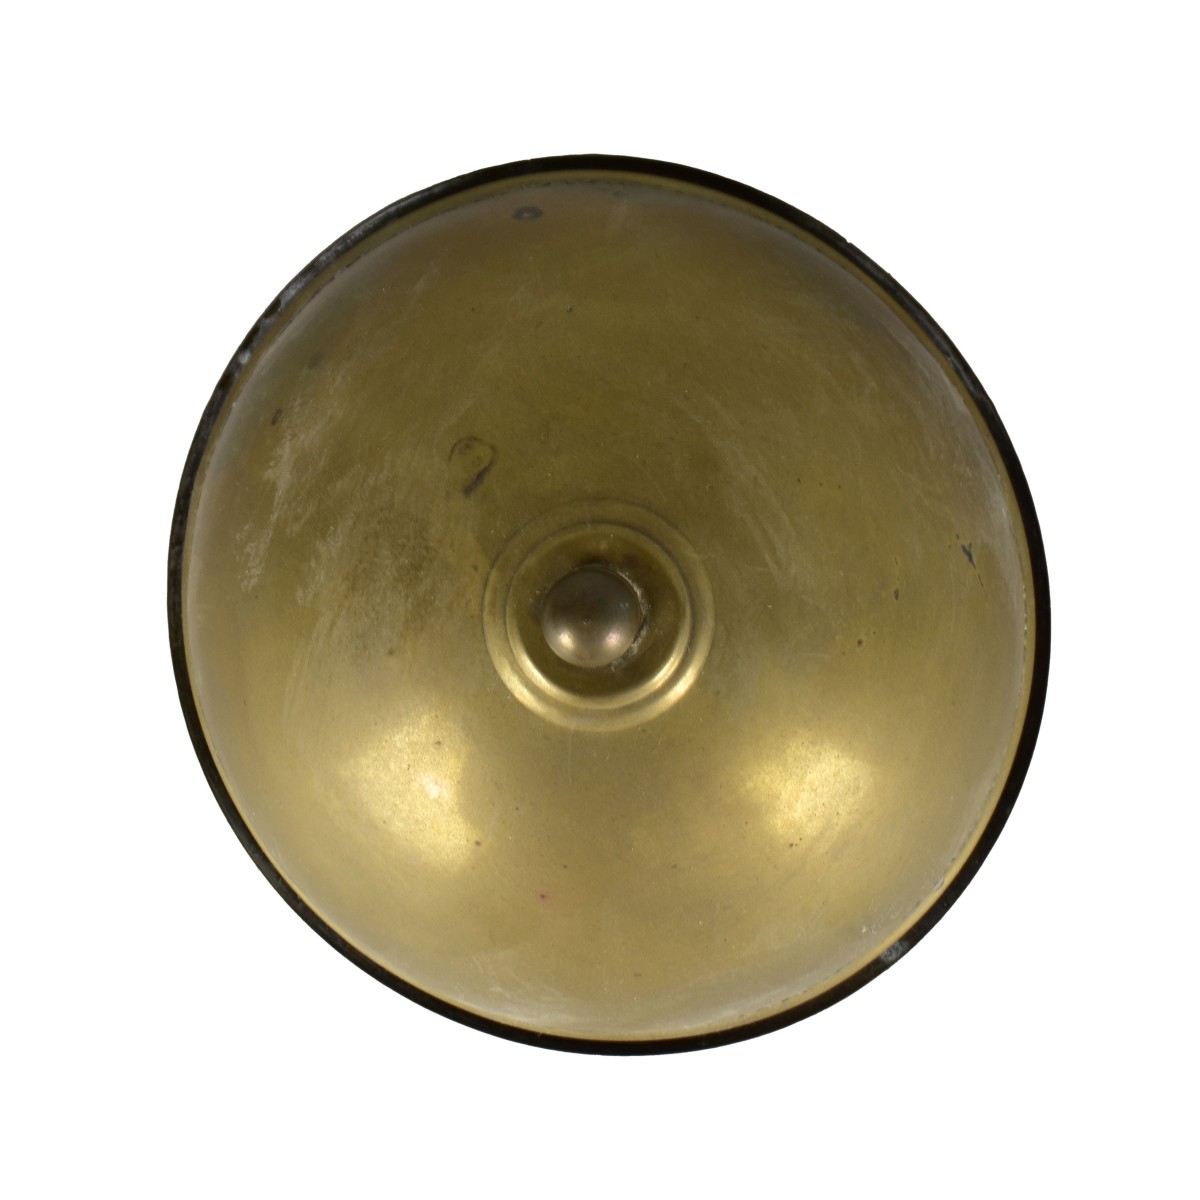 The Greist Mfg Co. Brass Lamp